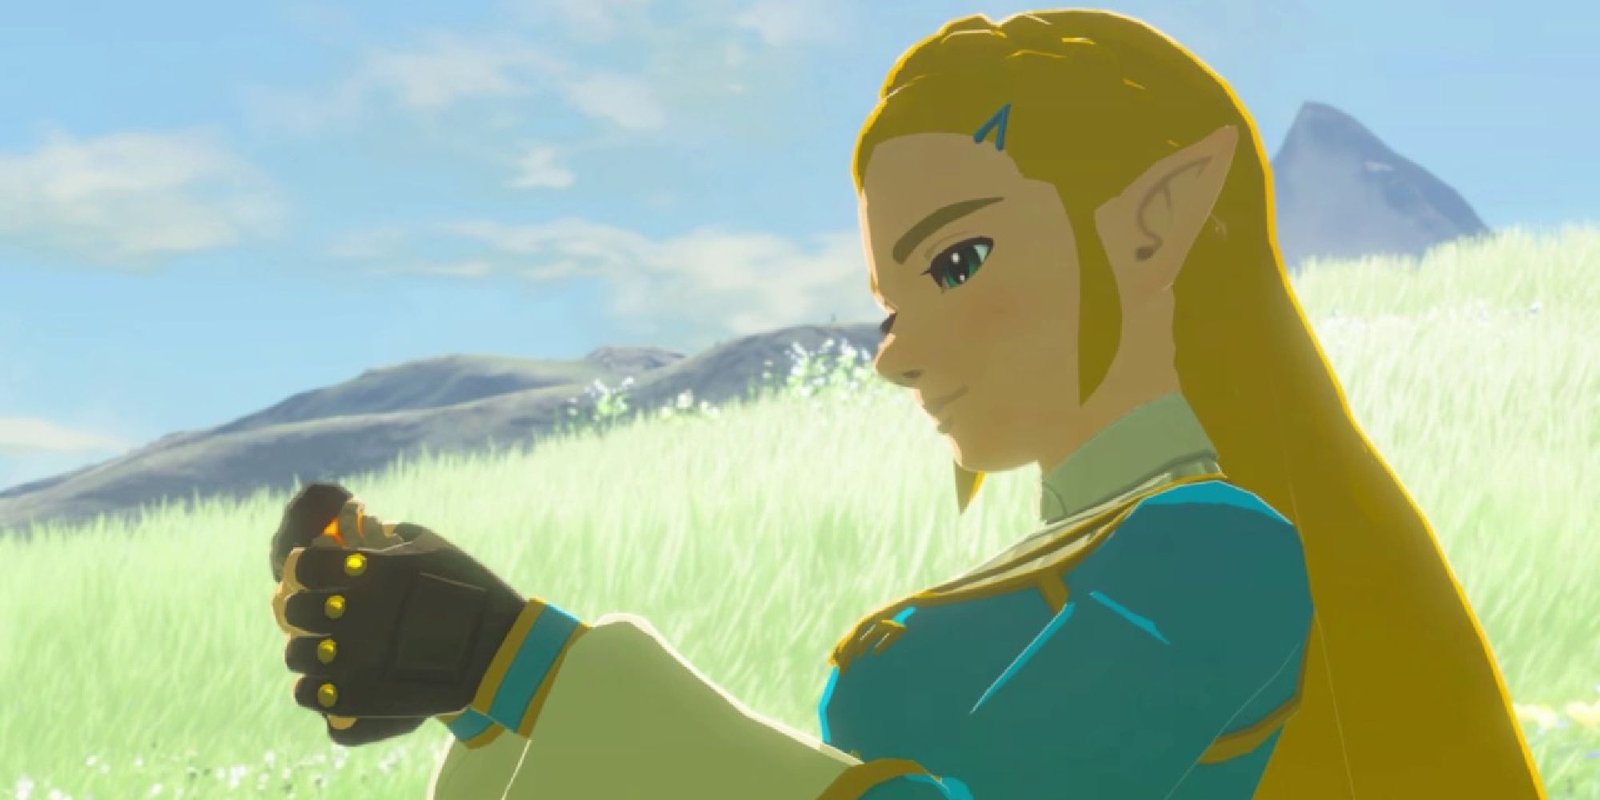 Princess Zelda standing in an open field in Hyrule looking at her Sheikah Slate